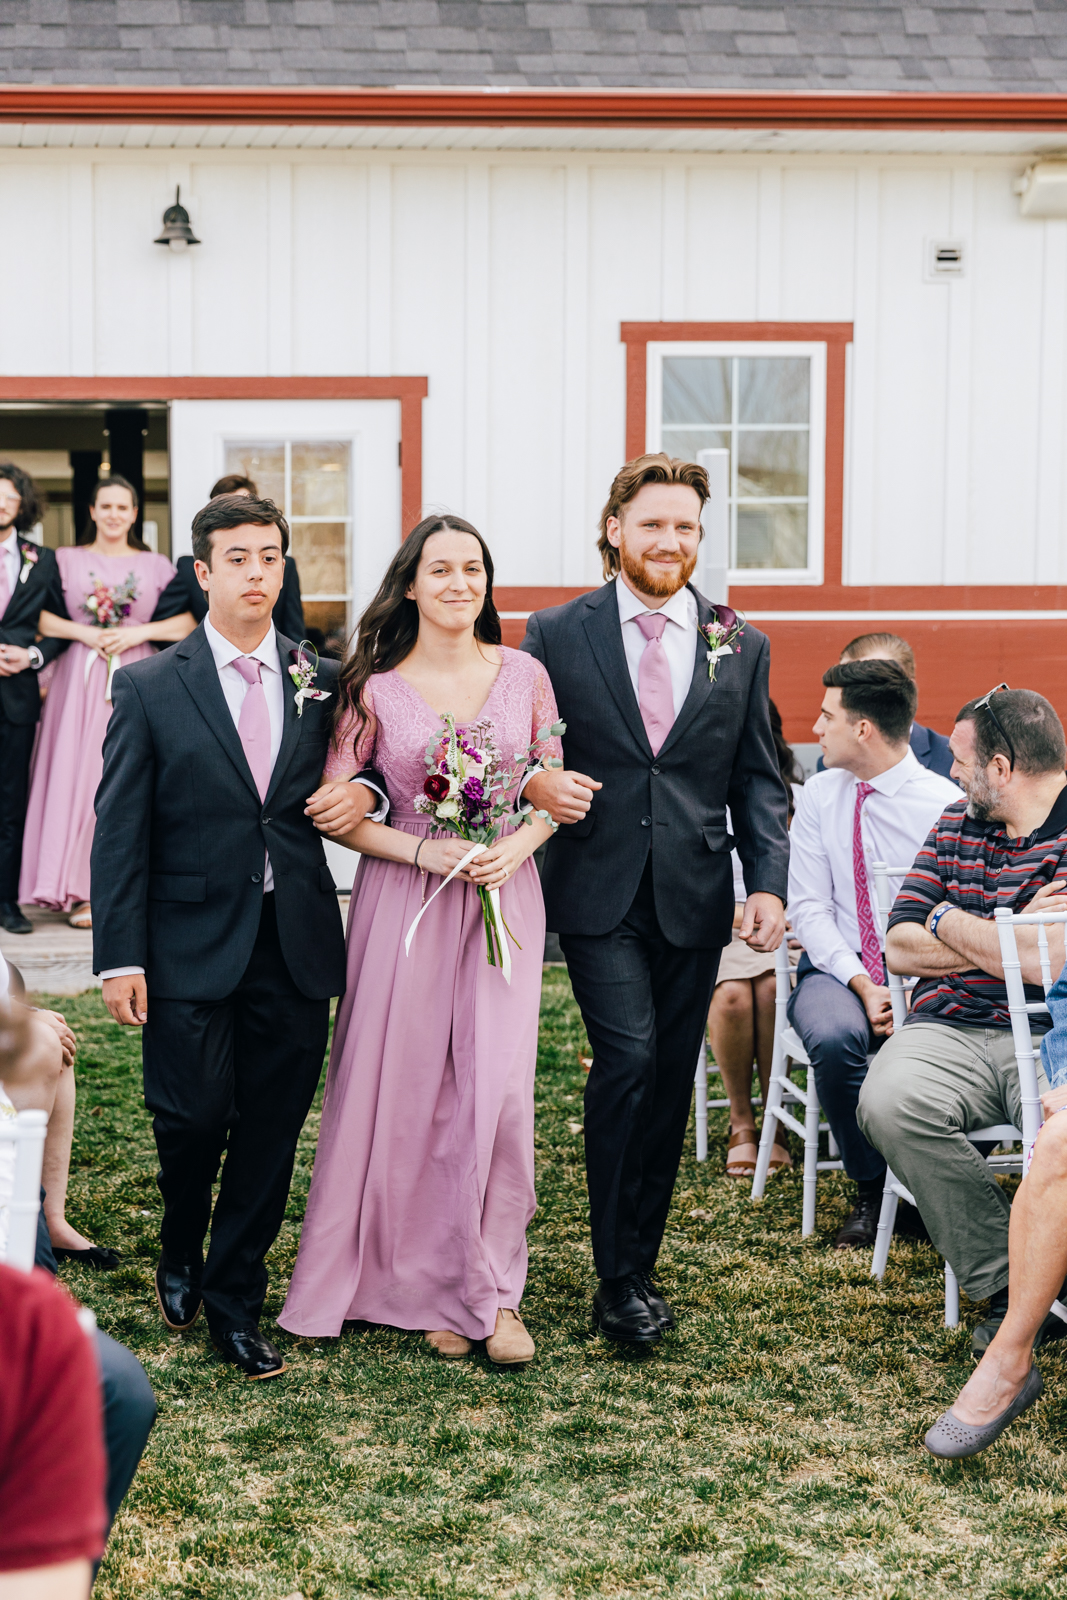 Jackson Hole wedding photographer capturessister and brothers